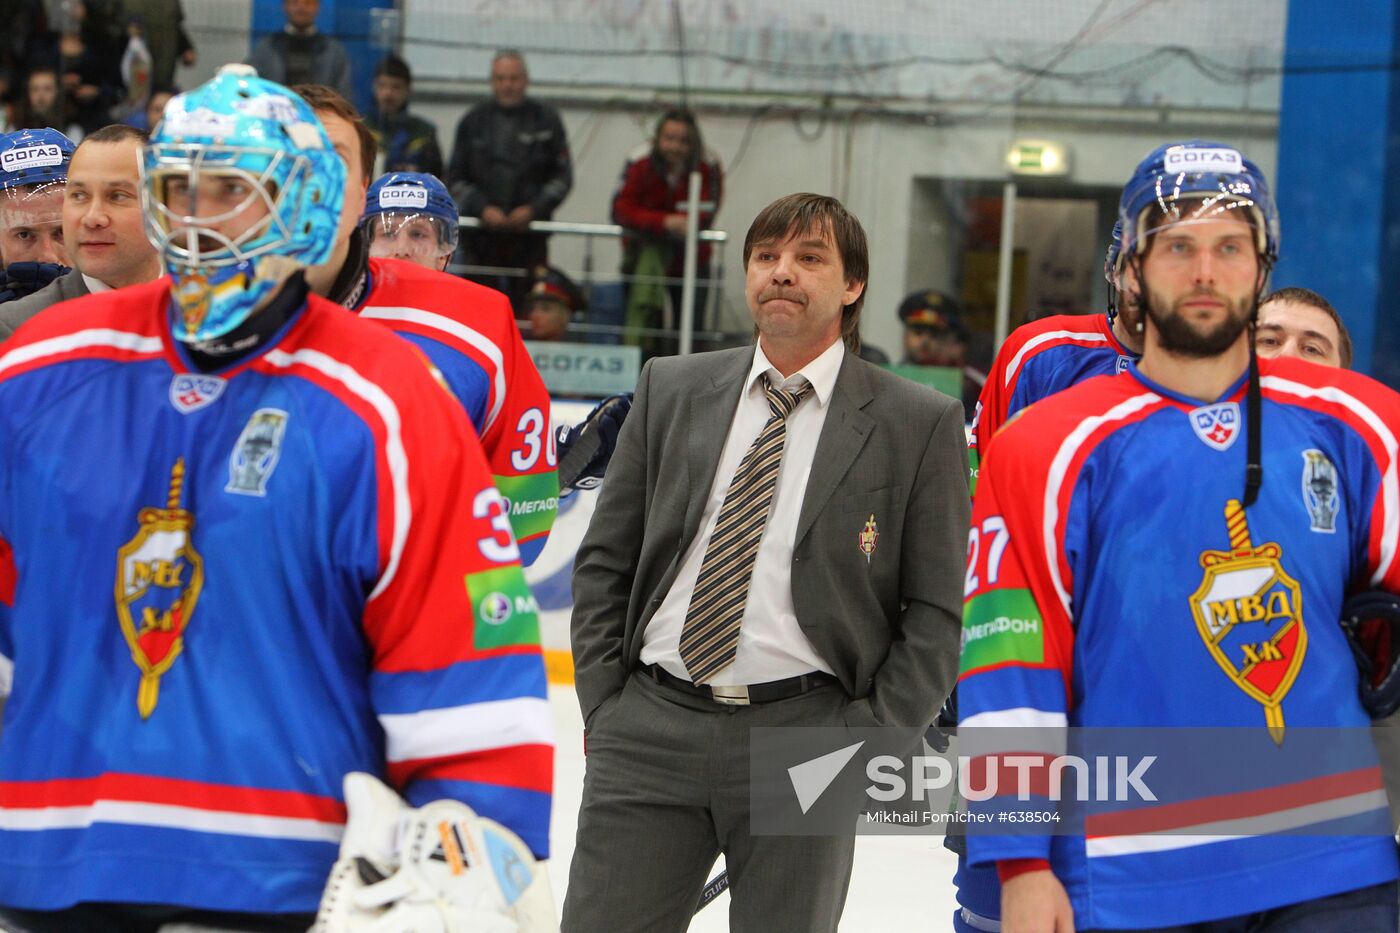 KHL playoff: MVD Moscow Region vs. Ak Bars Kazan